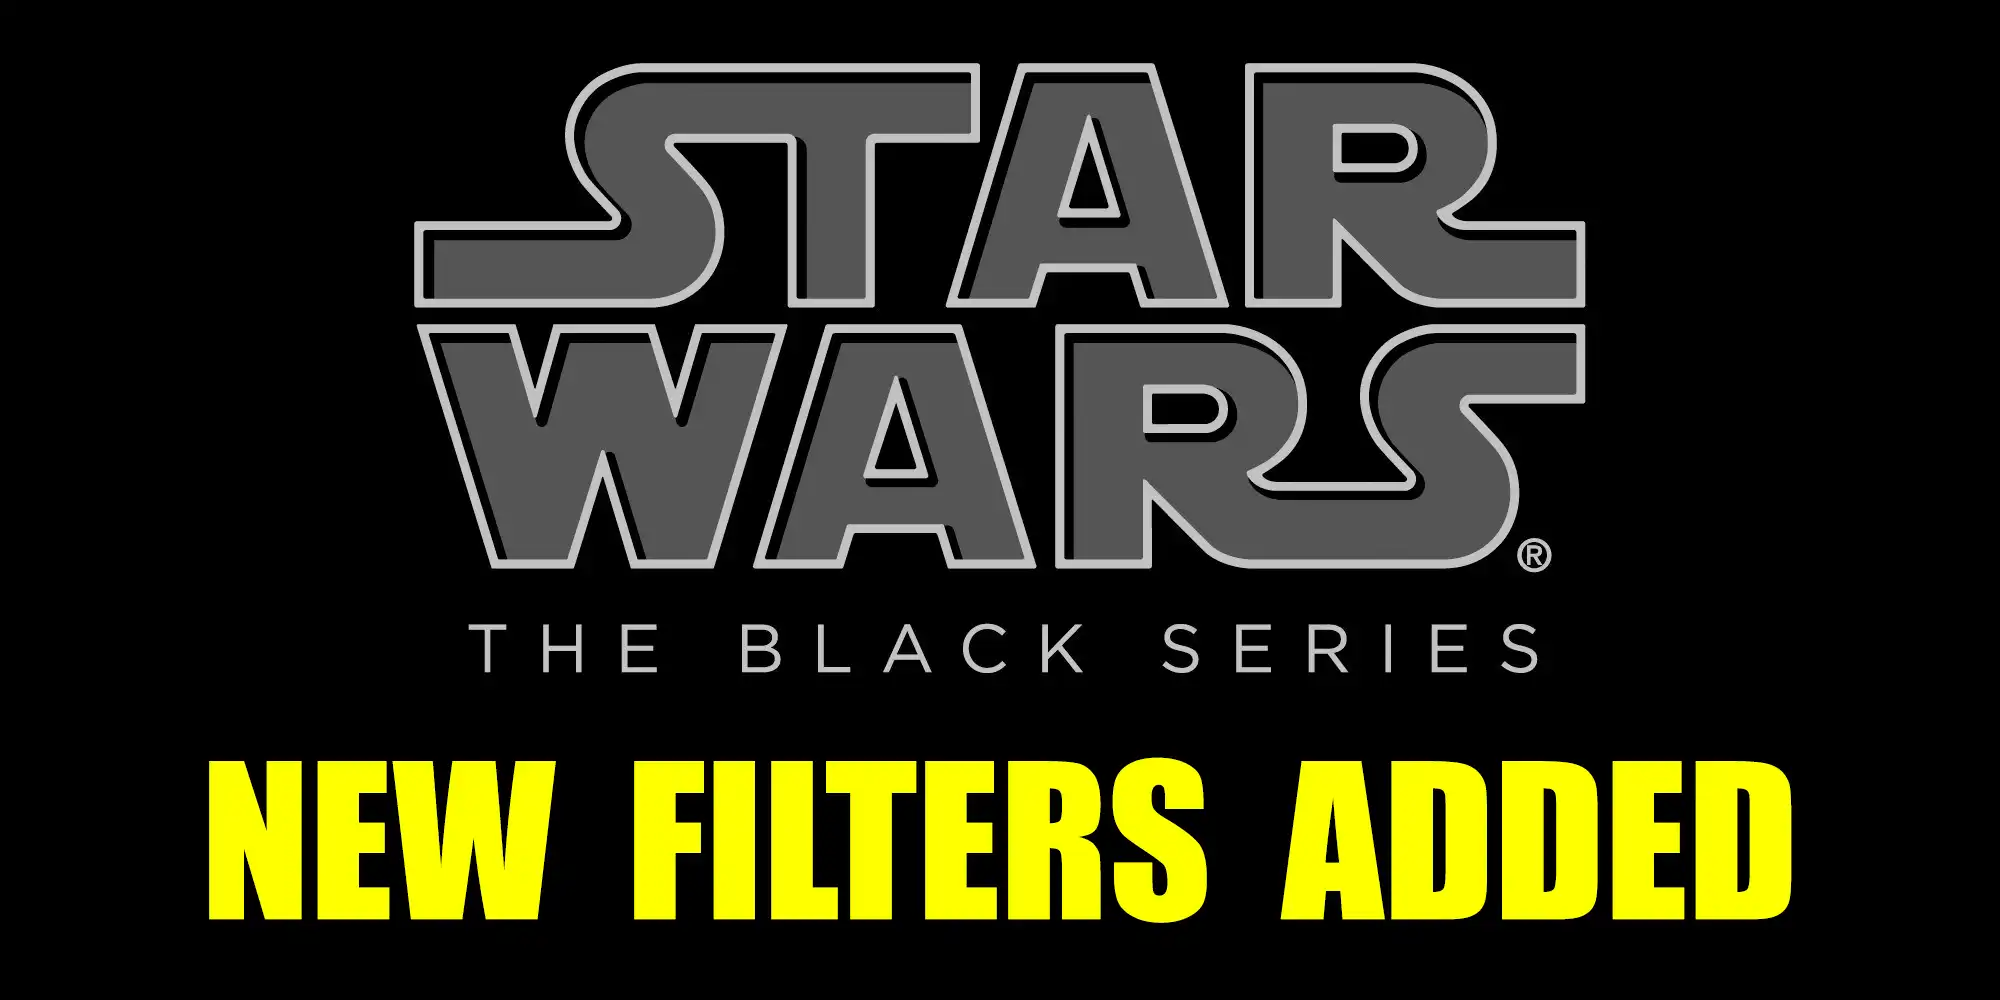 Black Series Added Filters